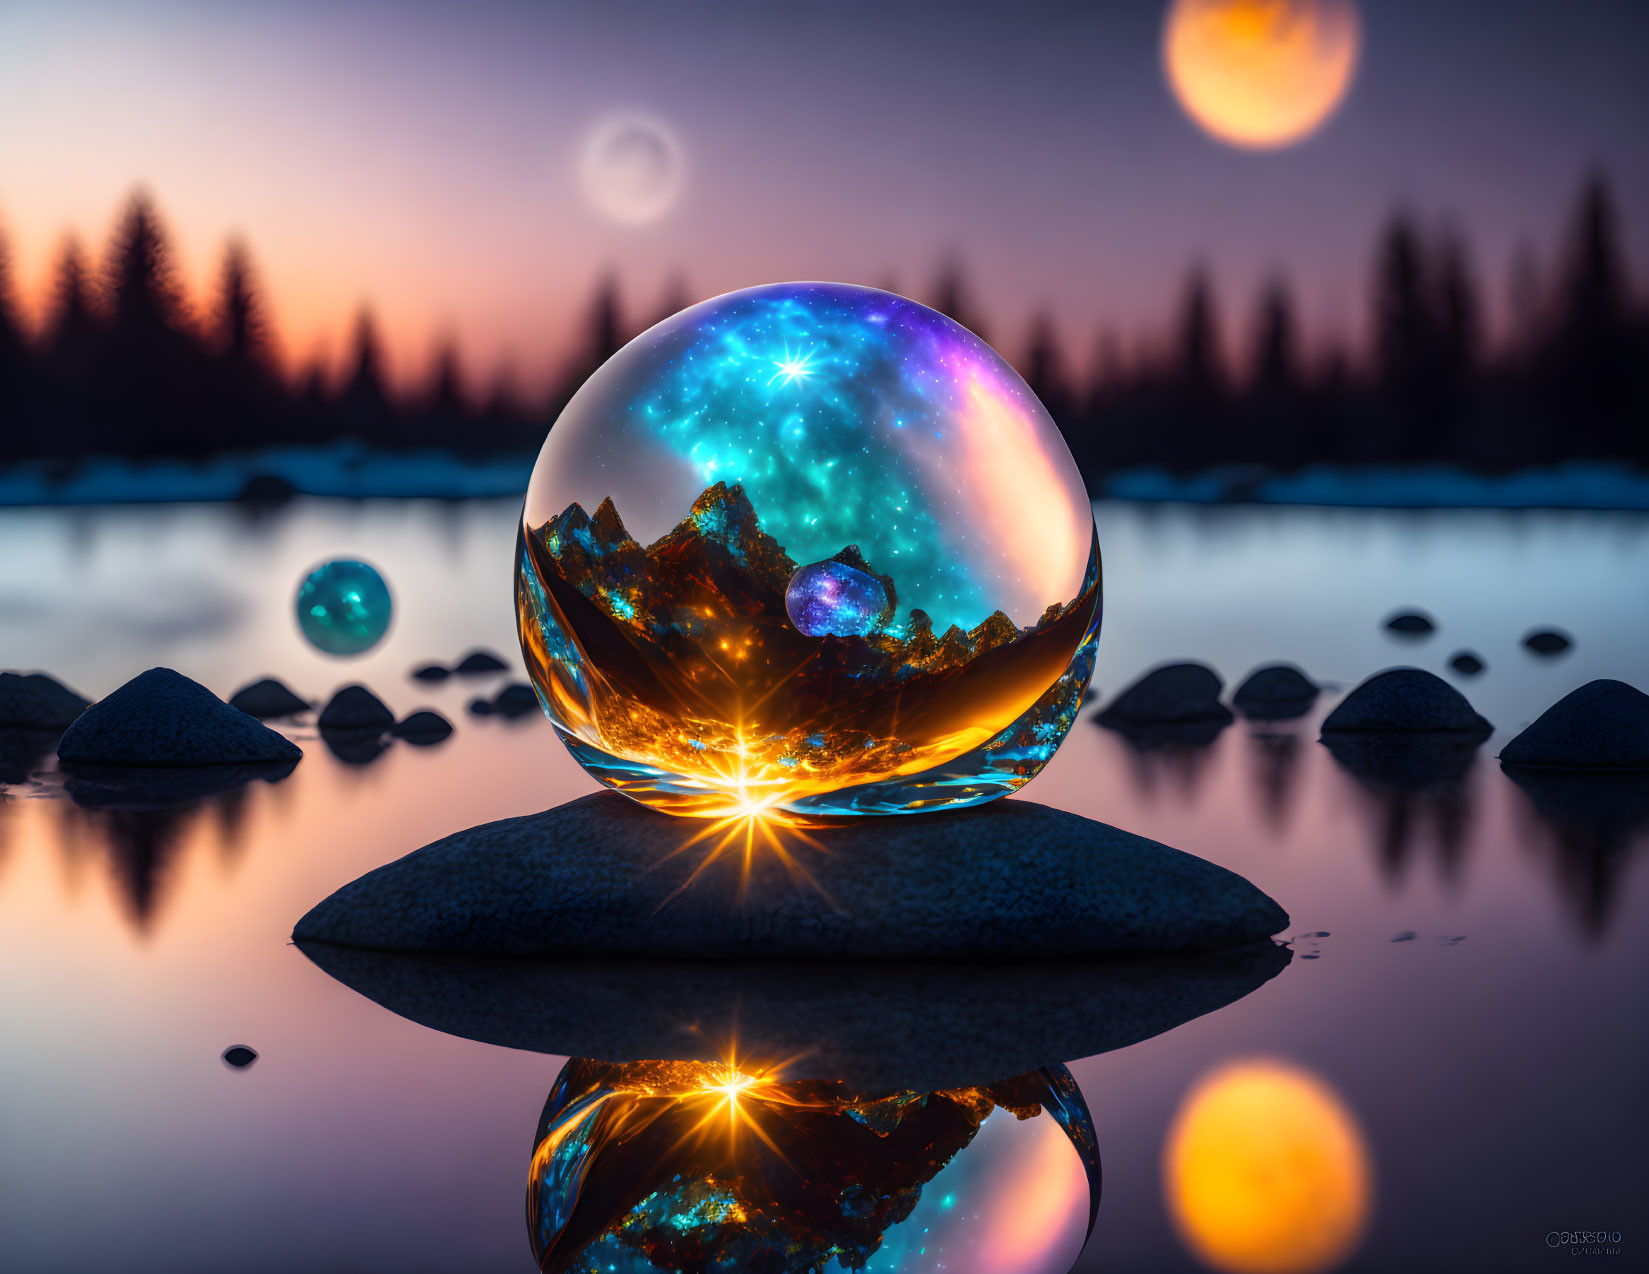 Crystal ball on rock reflects cosmic scene with stars and nebulas, twilight sky, lake.